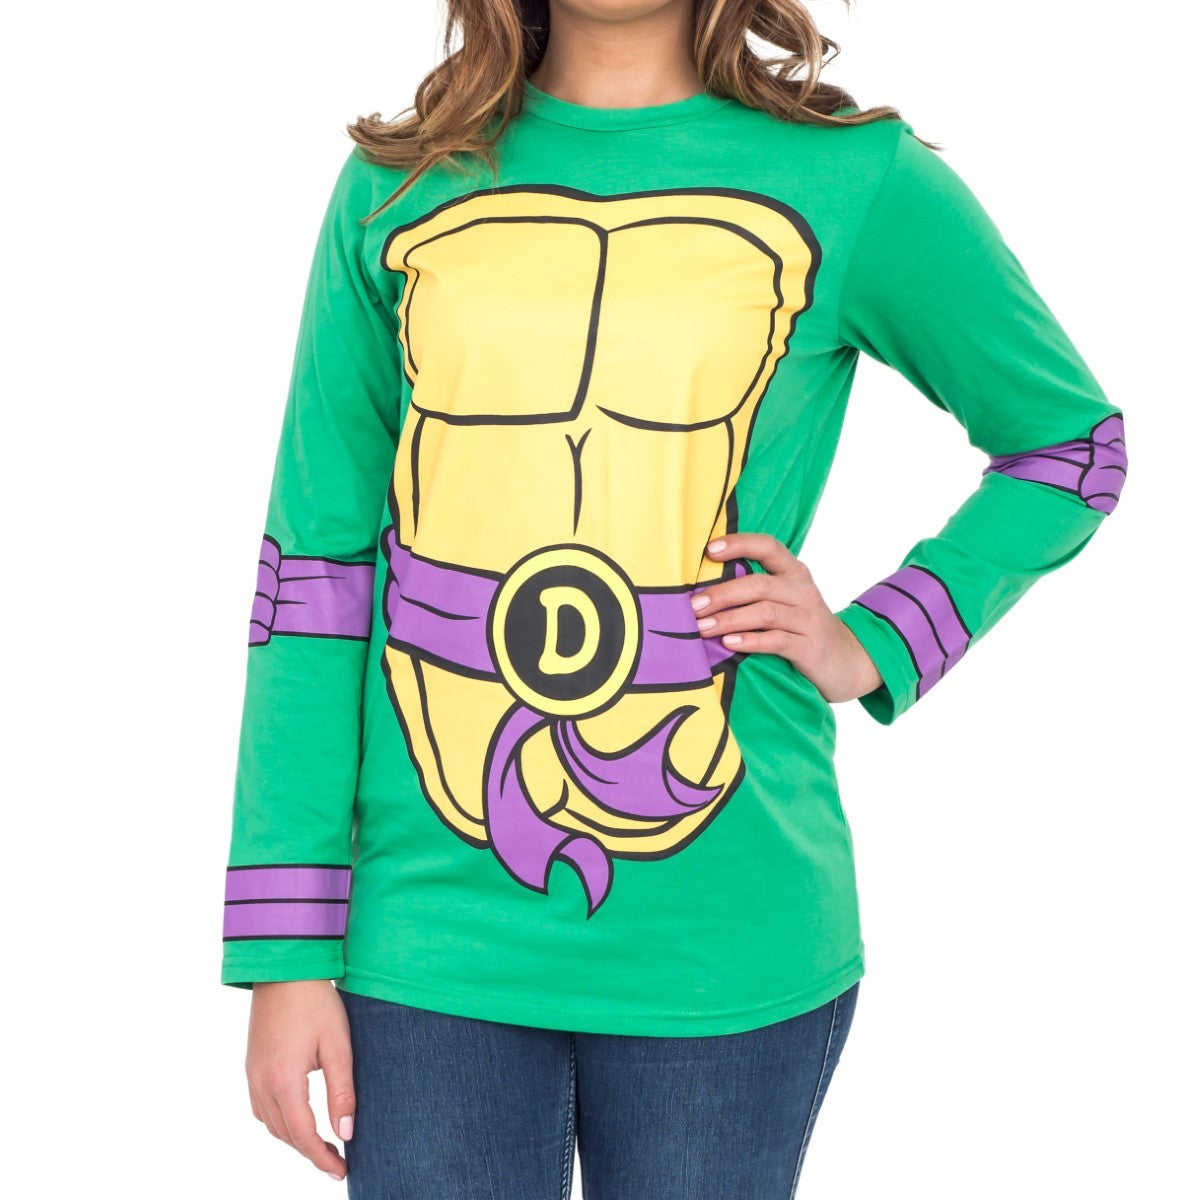 Teenage Mutant Ninja Turtles X Scott Pilgrim vs The World cartoon shirt,  hoodie, sweater, long sleeve and tank top